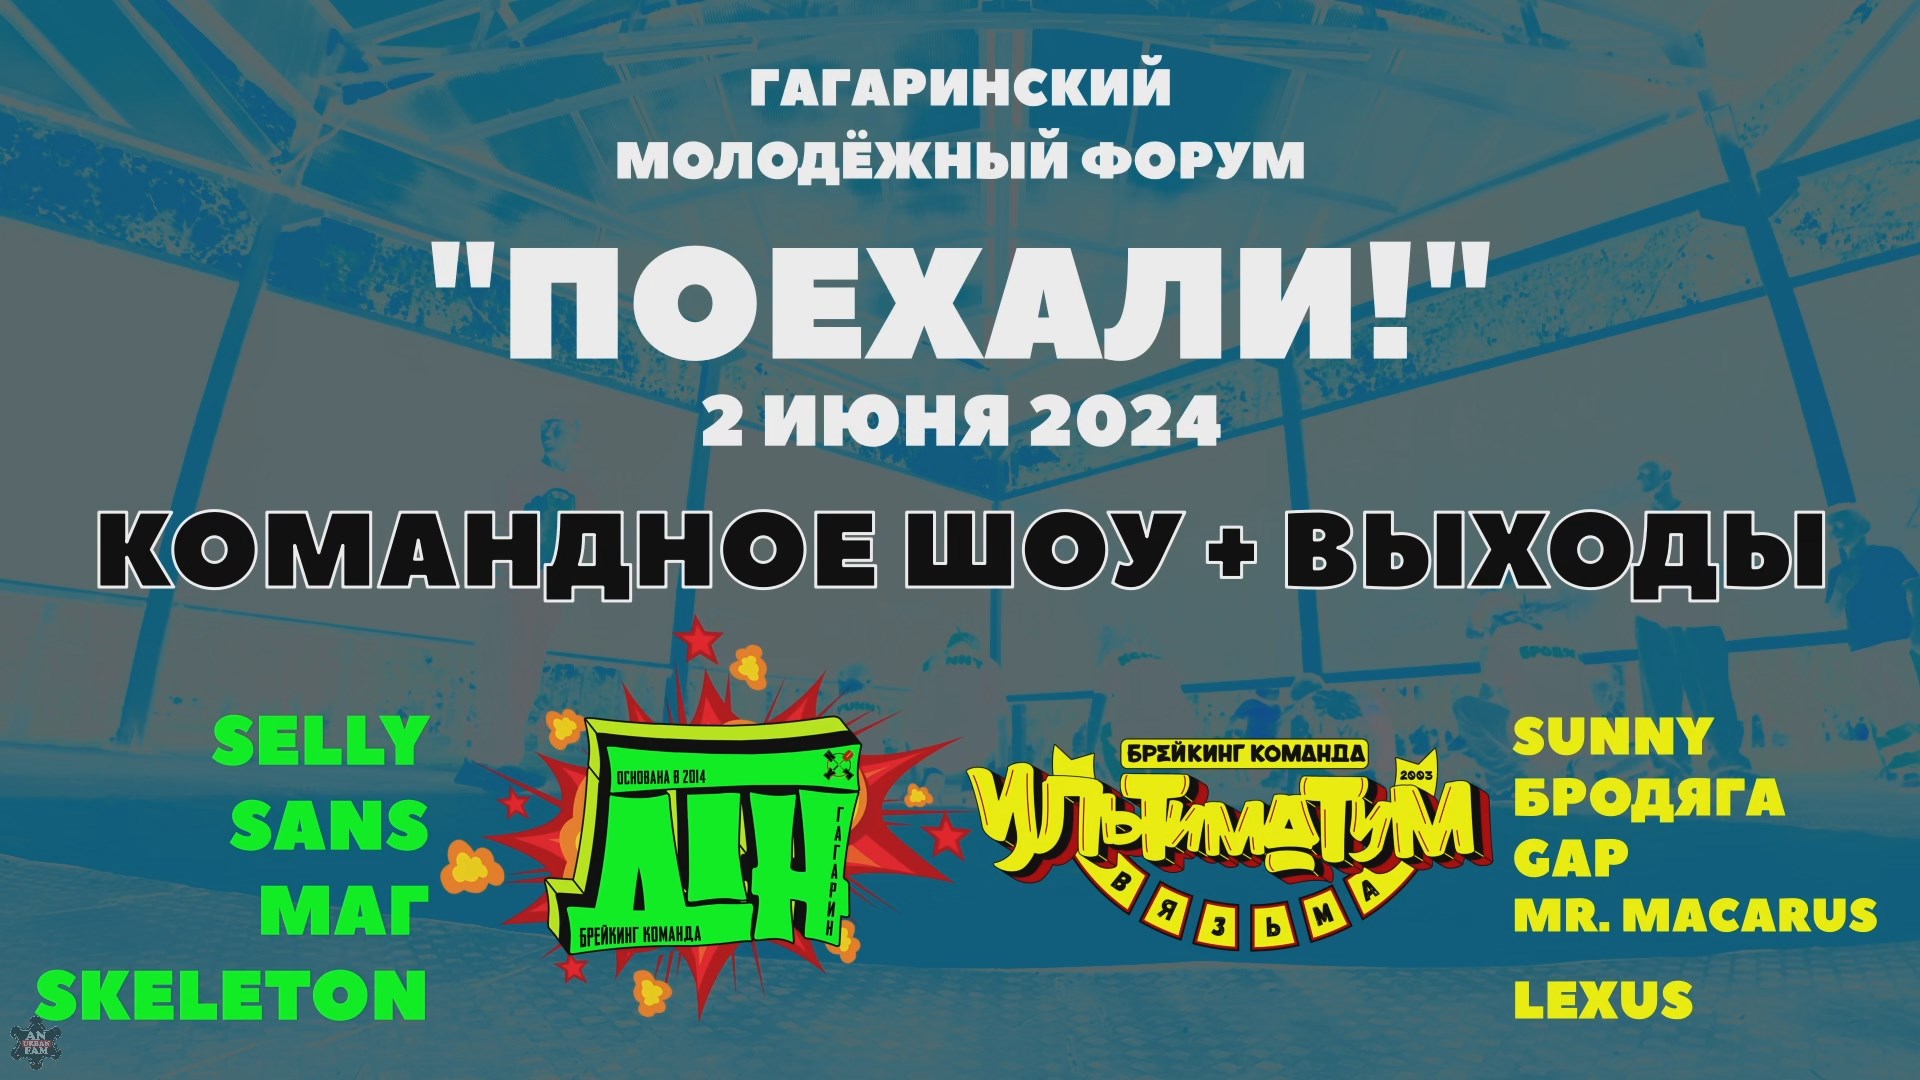 ANUF_УЛТ\ДТН_Молодёжный форум (Гагарин)_Шоу+выходы_2.06.2024